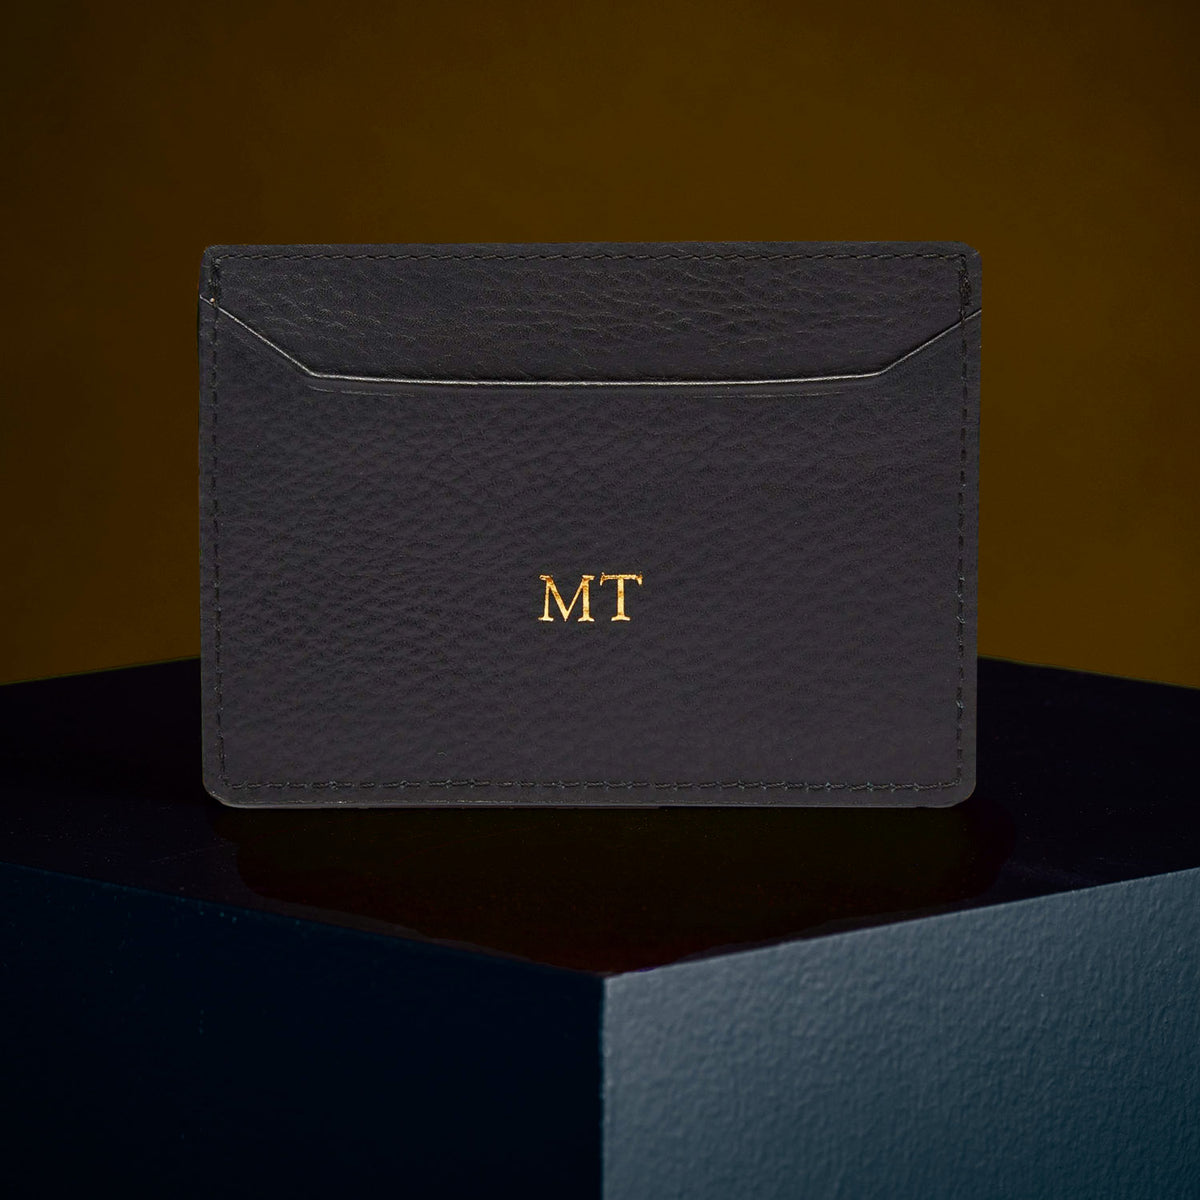 James Bond 007 Personalised Leather Card Holder - Black Edition